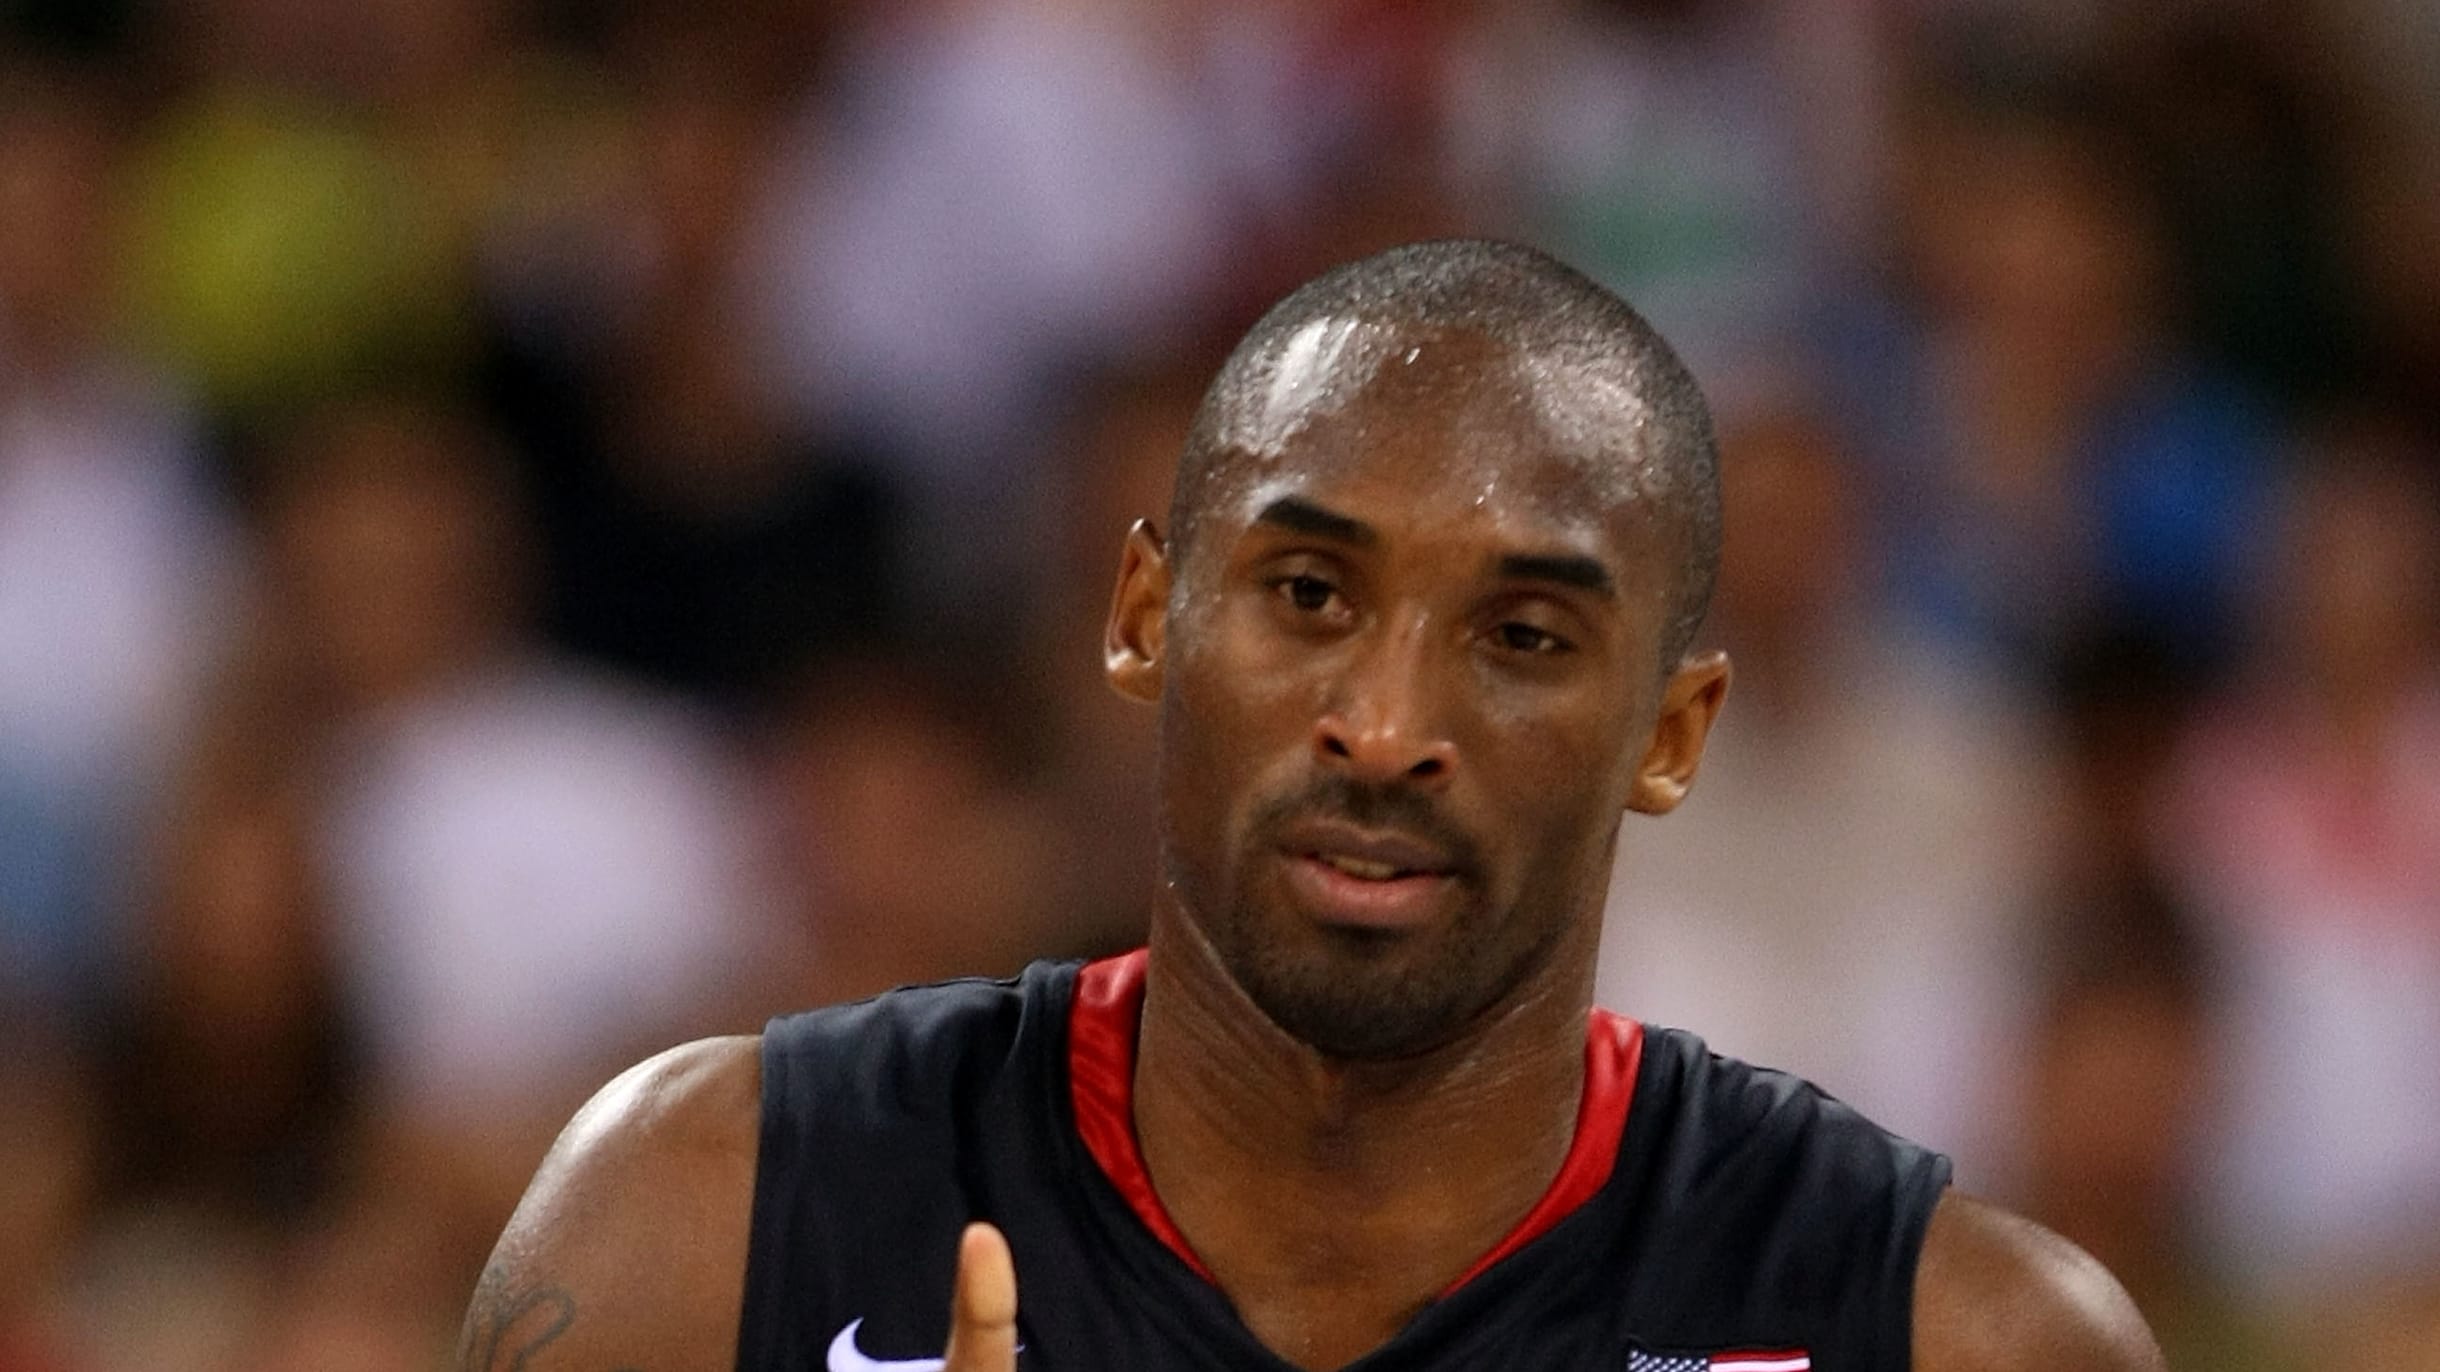 Lakers: Jason Kidd thinks LeBron James learned from Kobe Bryant